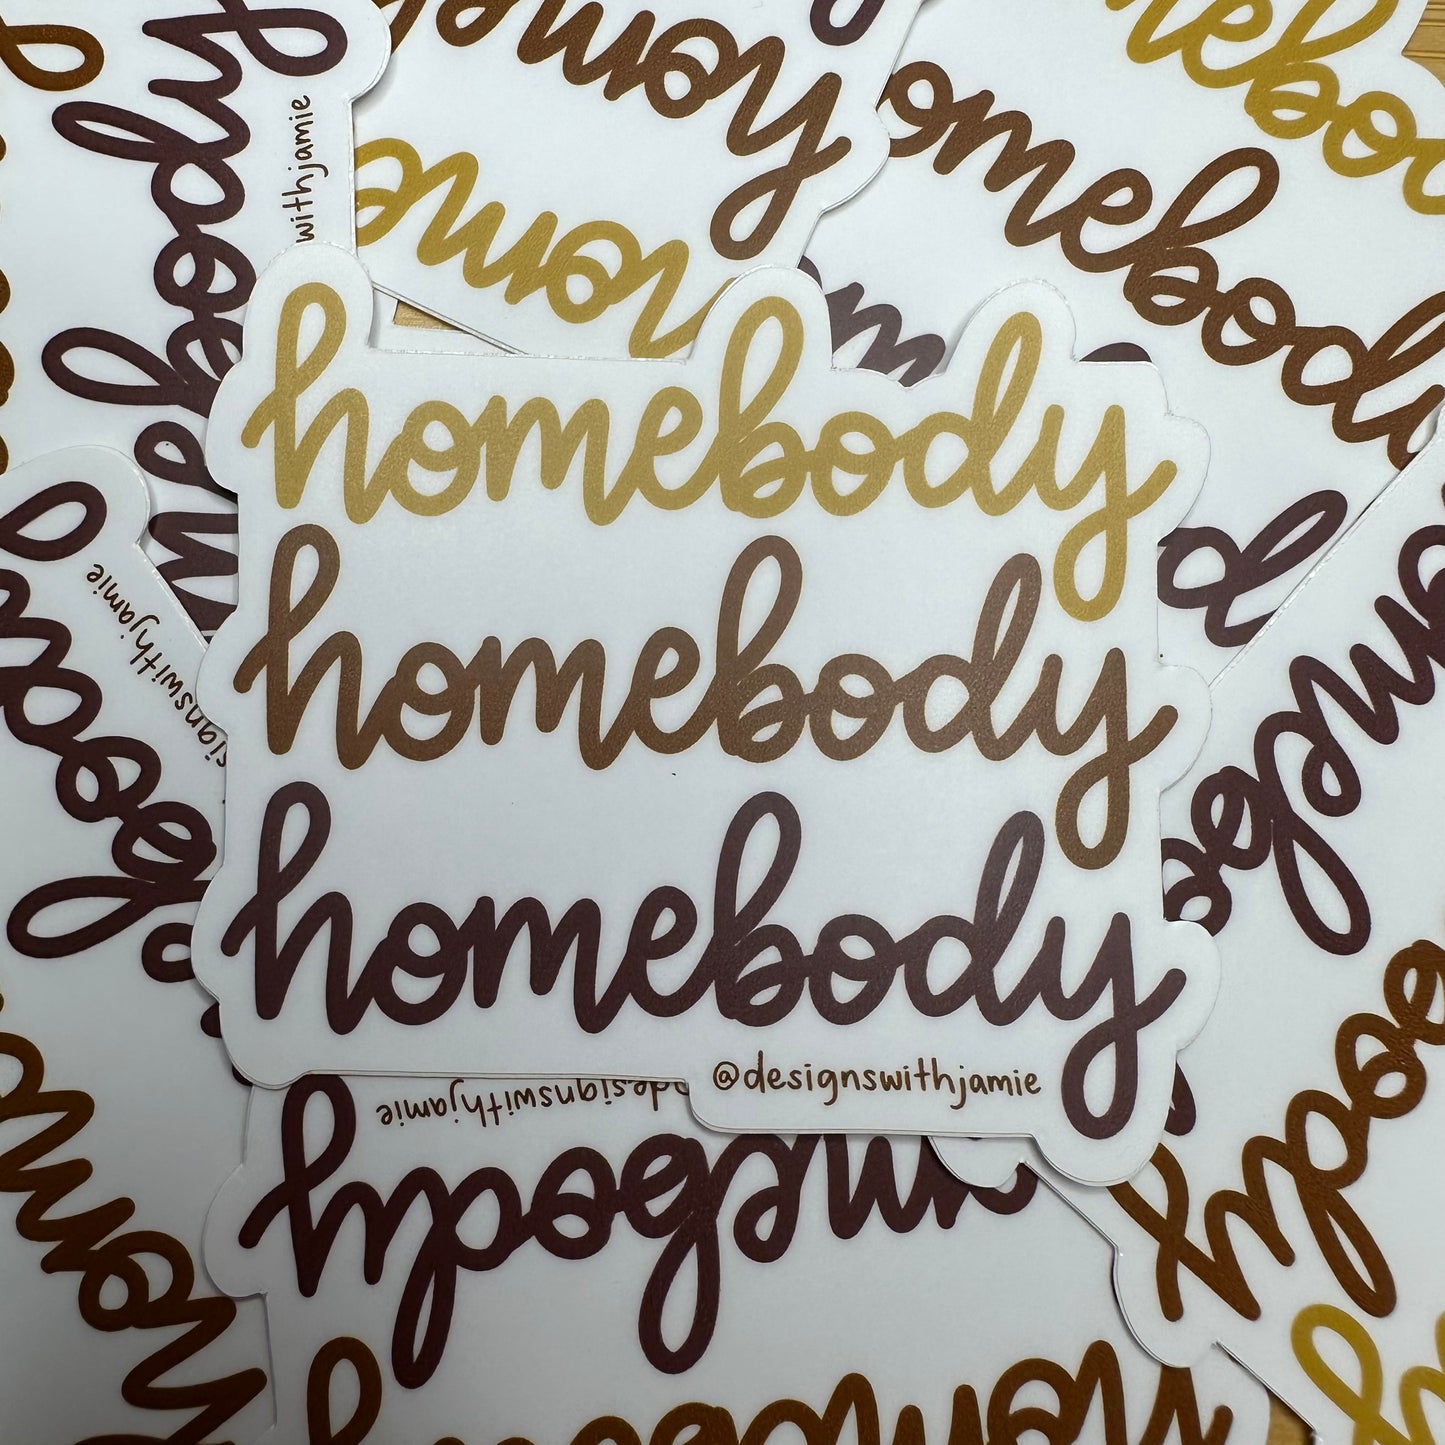 Homebody Sticker